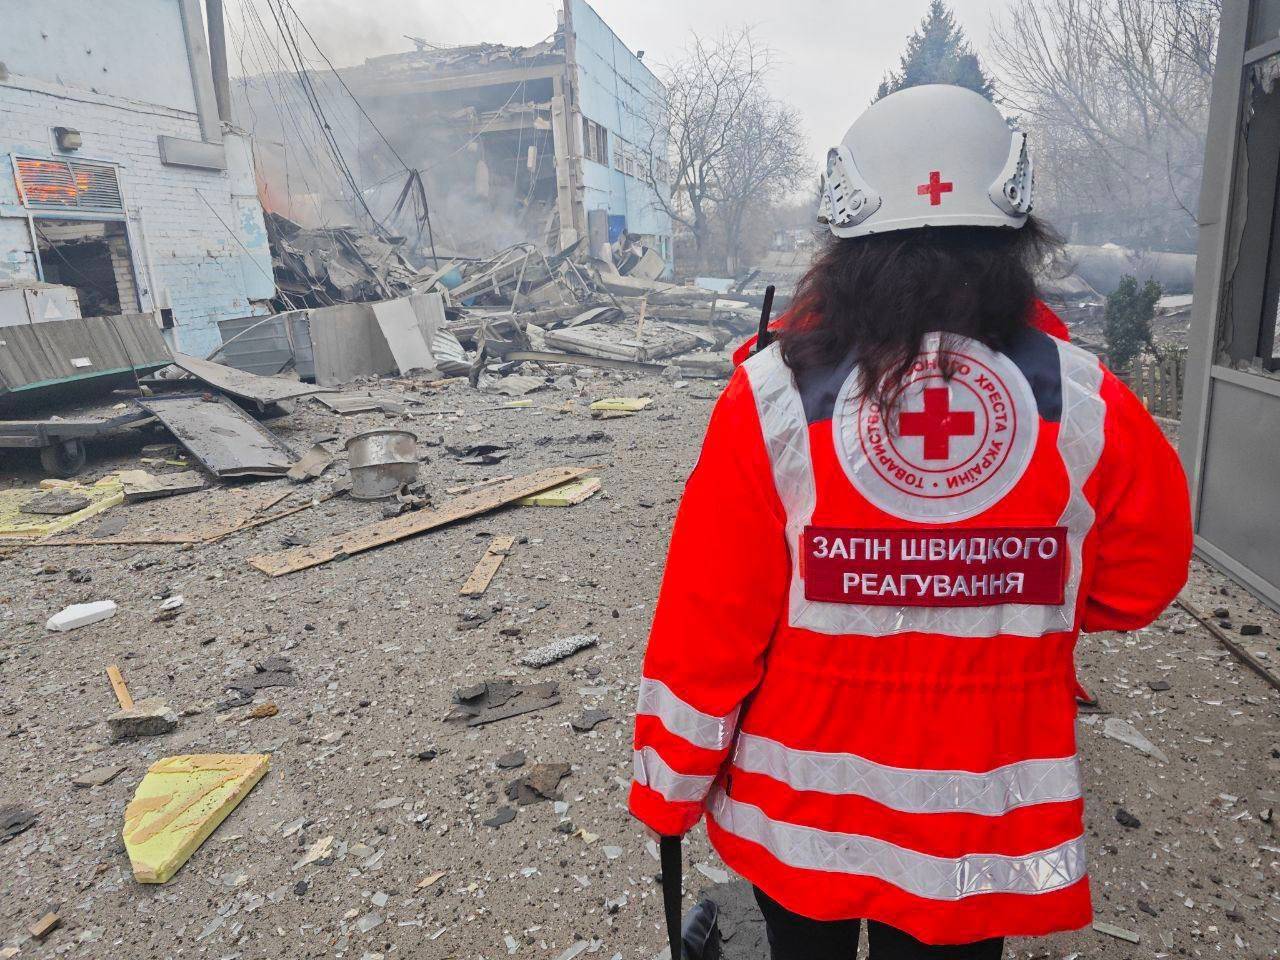 Ukrainian Red Cross Society responding after an attack